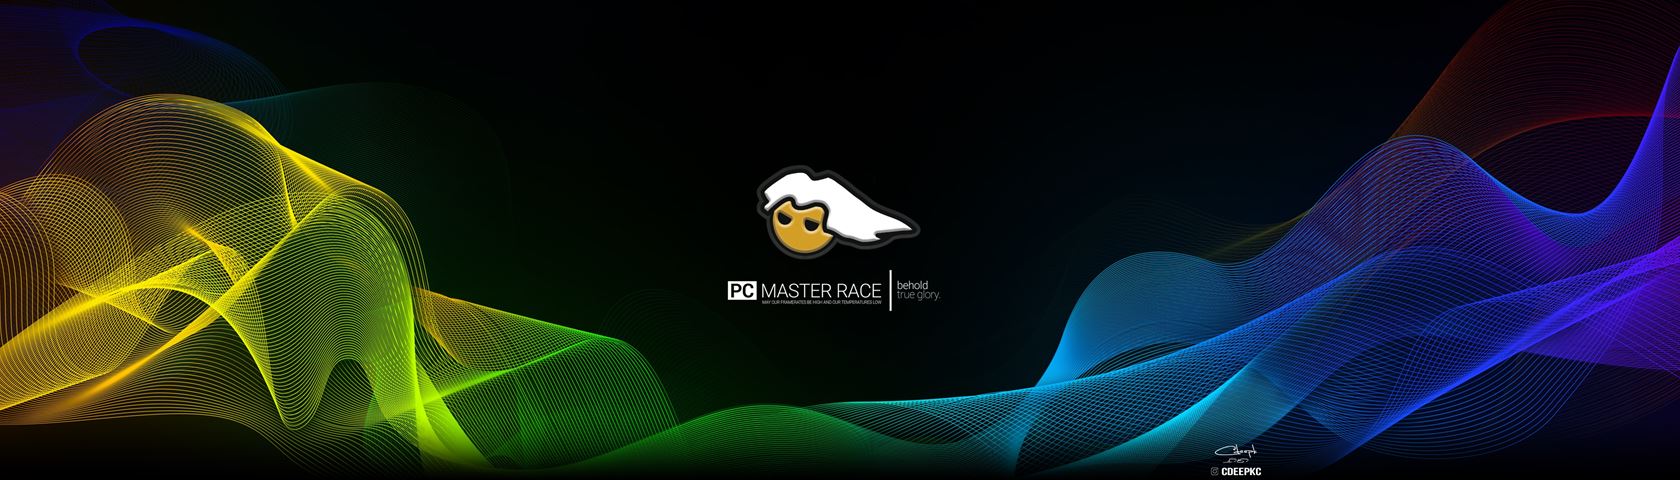 Pc Master Race Wallpaper - Razer Wallpaper 3 Monitor , HD Wallpaper & Backgrounds